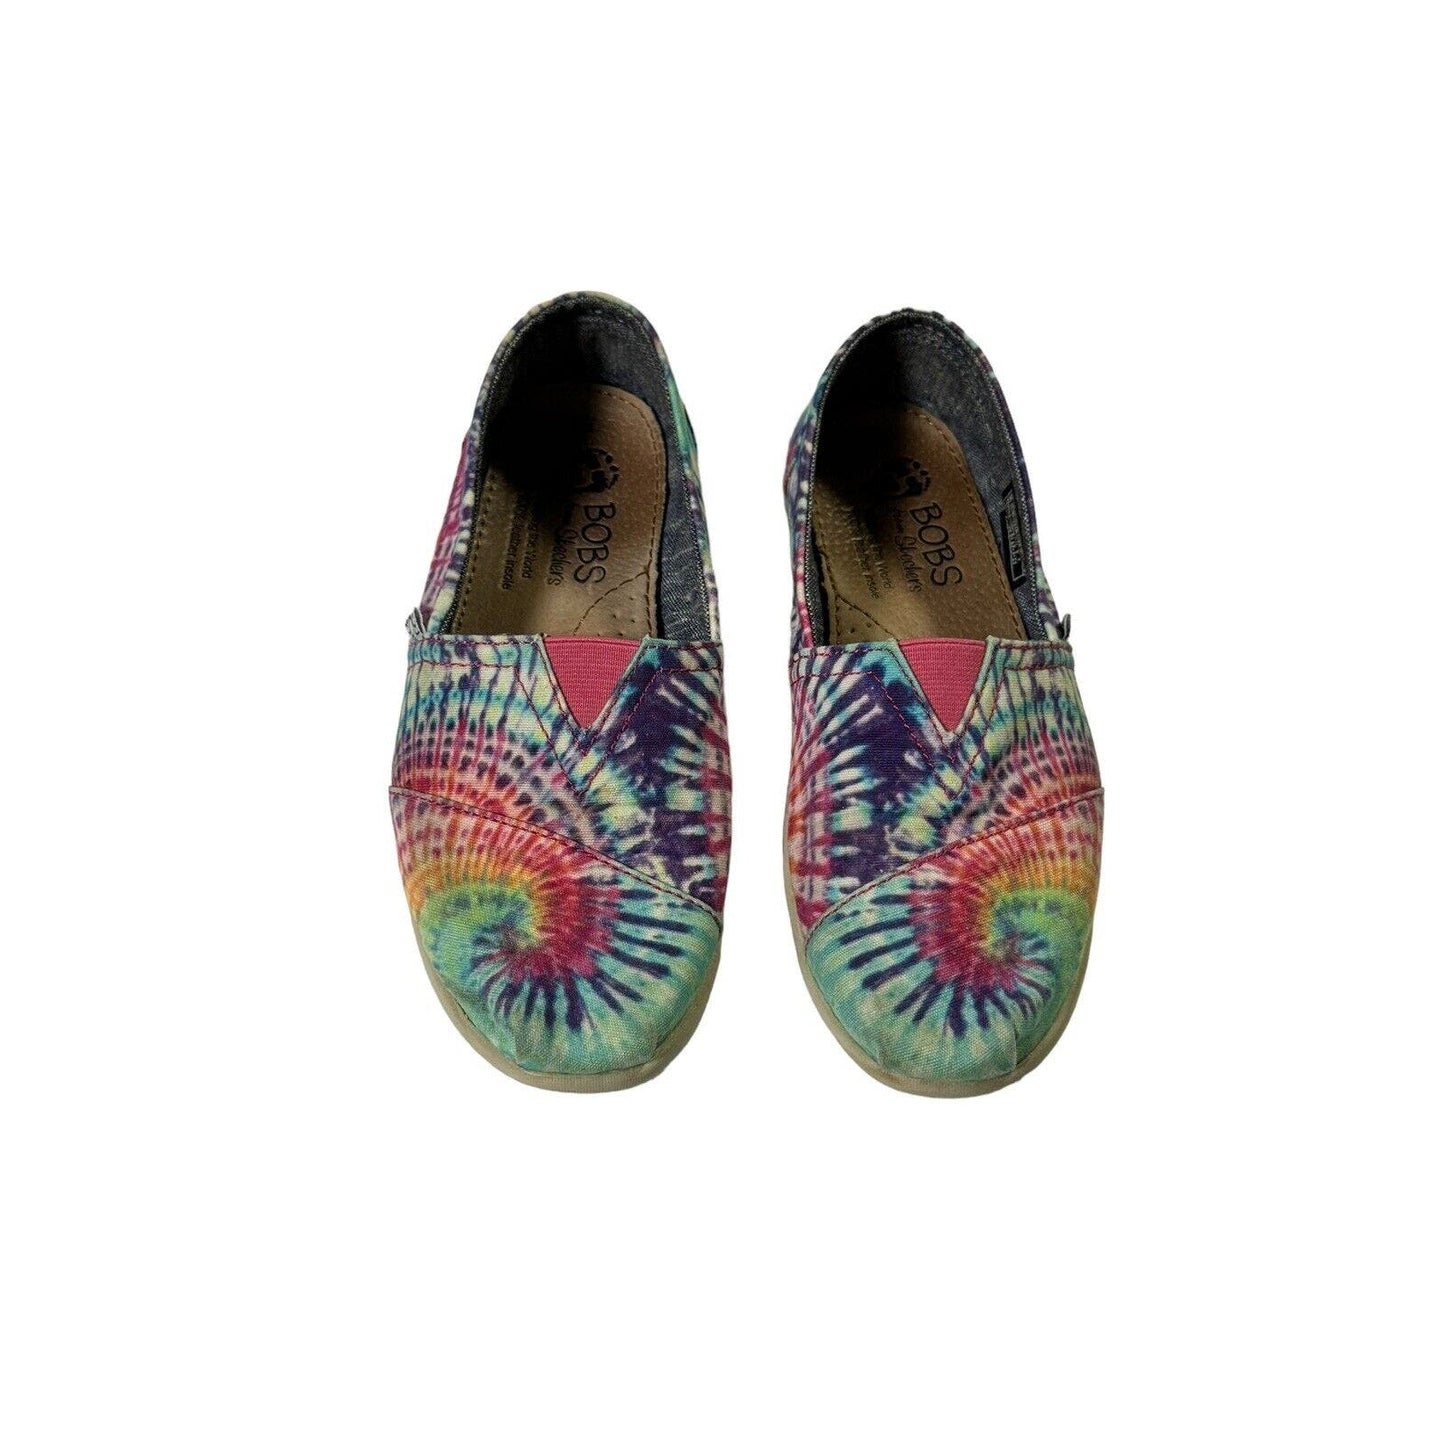 Bobs By Skechers Tie Dye Multi Colored Slip On Shoes Size 6 SN 33749